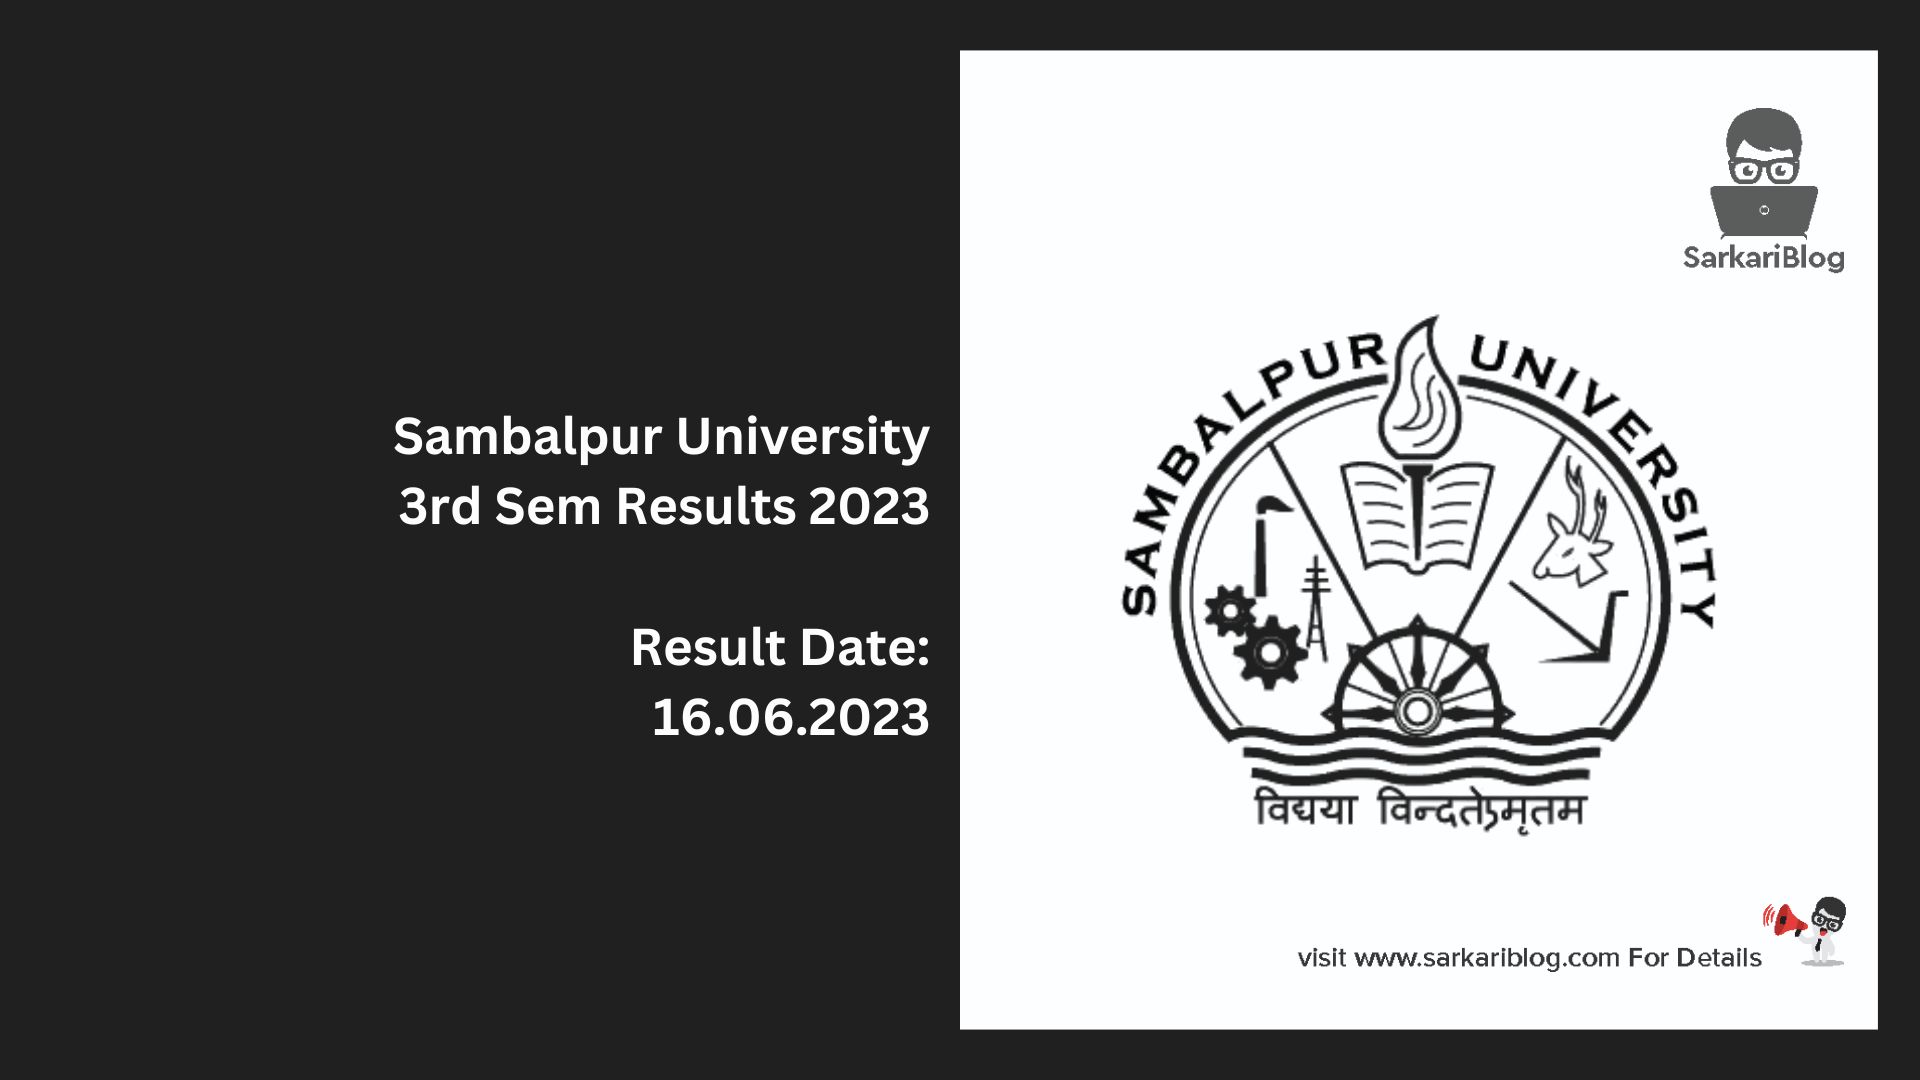 Sambalpur University 3rd Sem Results 2023